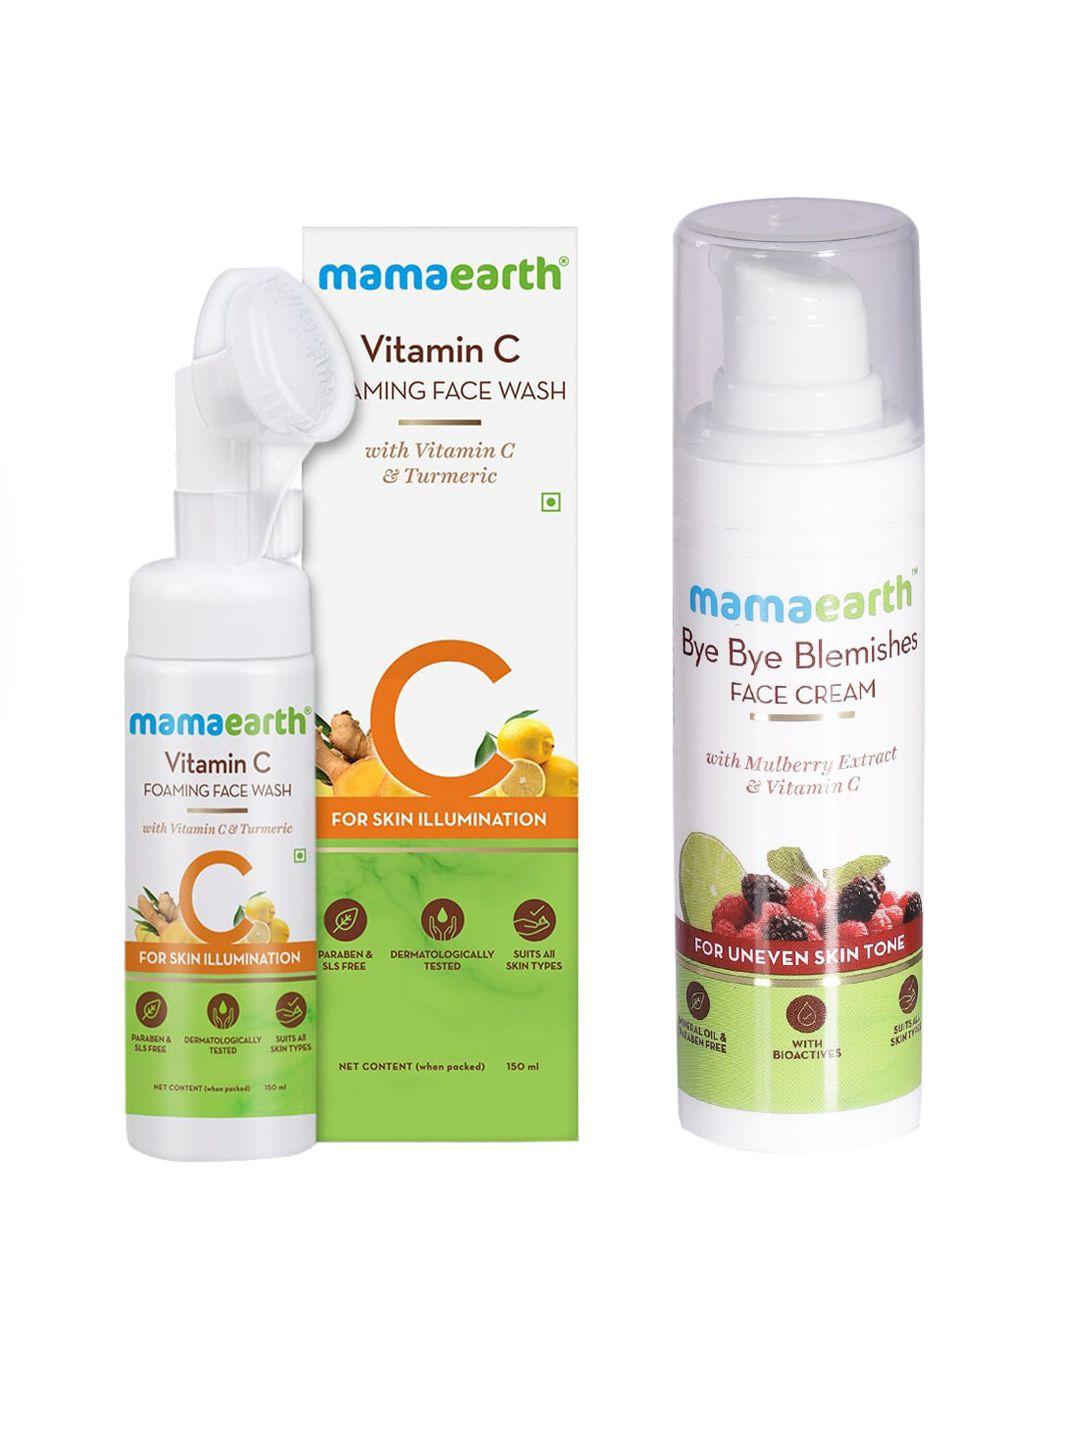 mamaearth unisex set of vitamin c foaming face wash & bye bye blemishes face cream